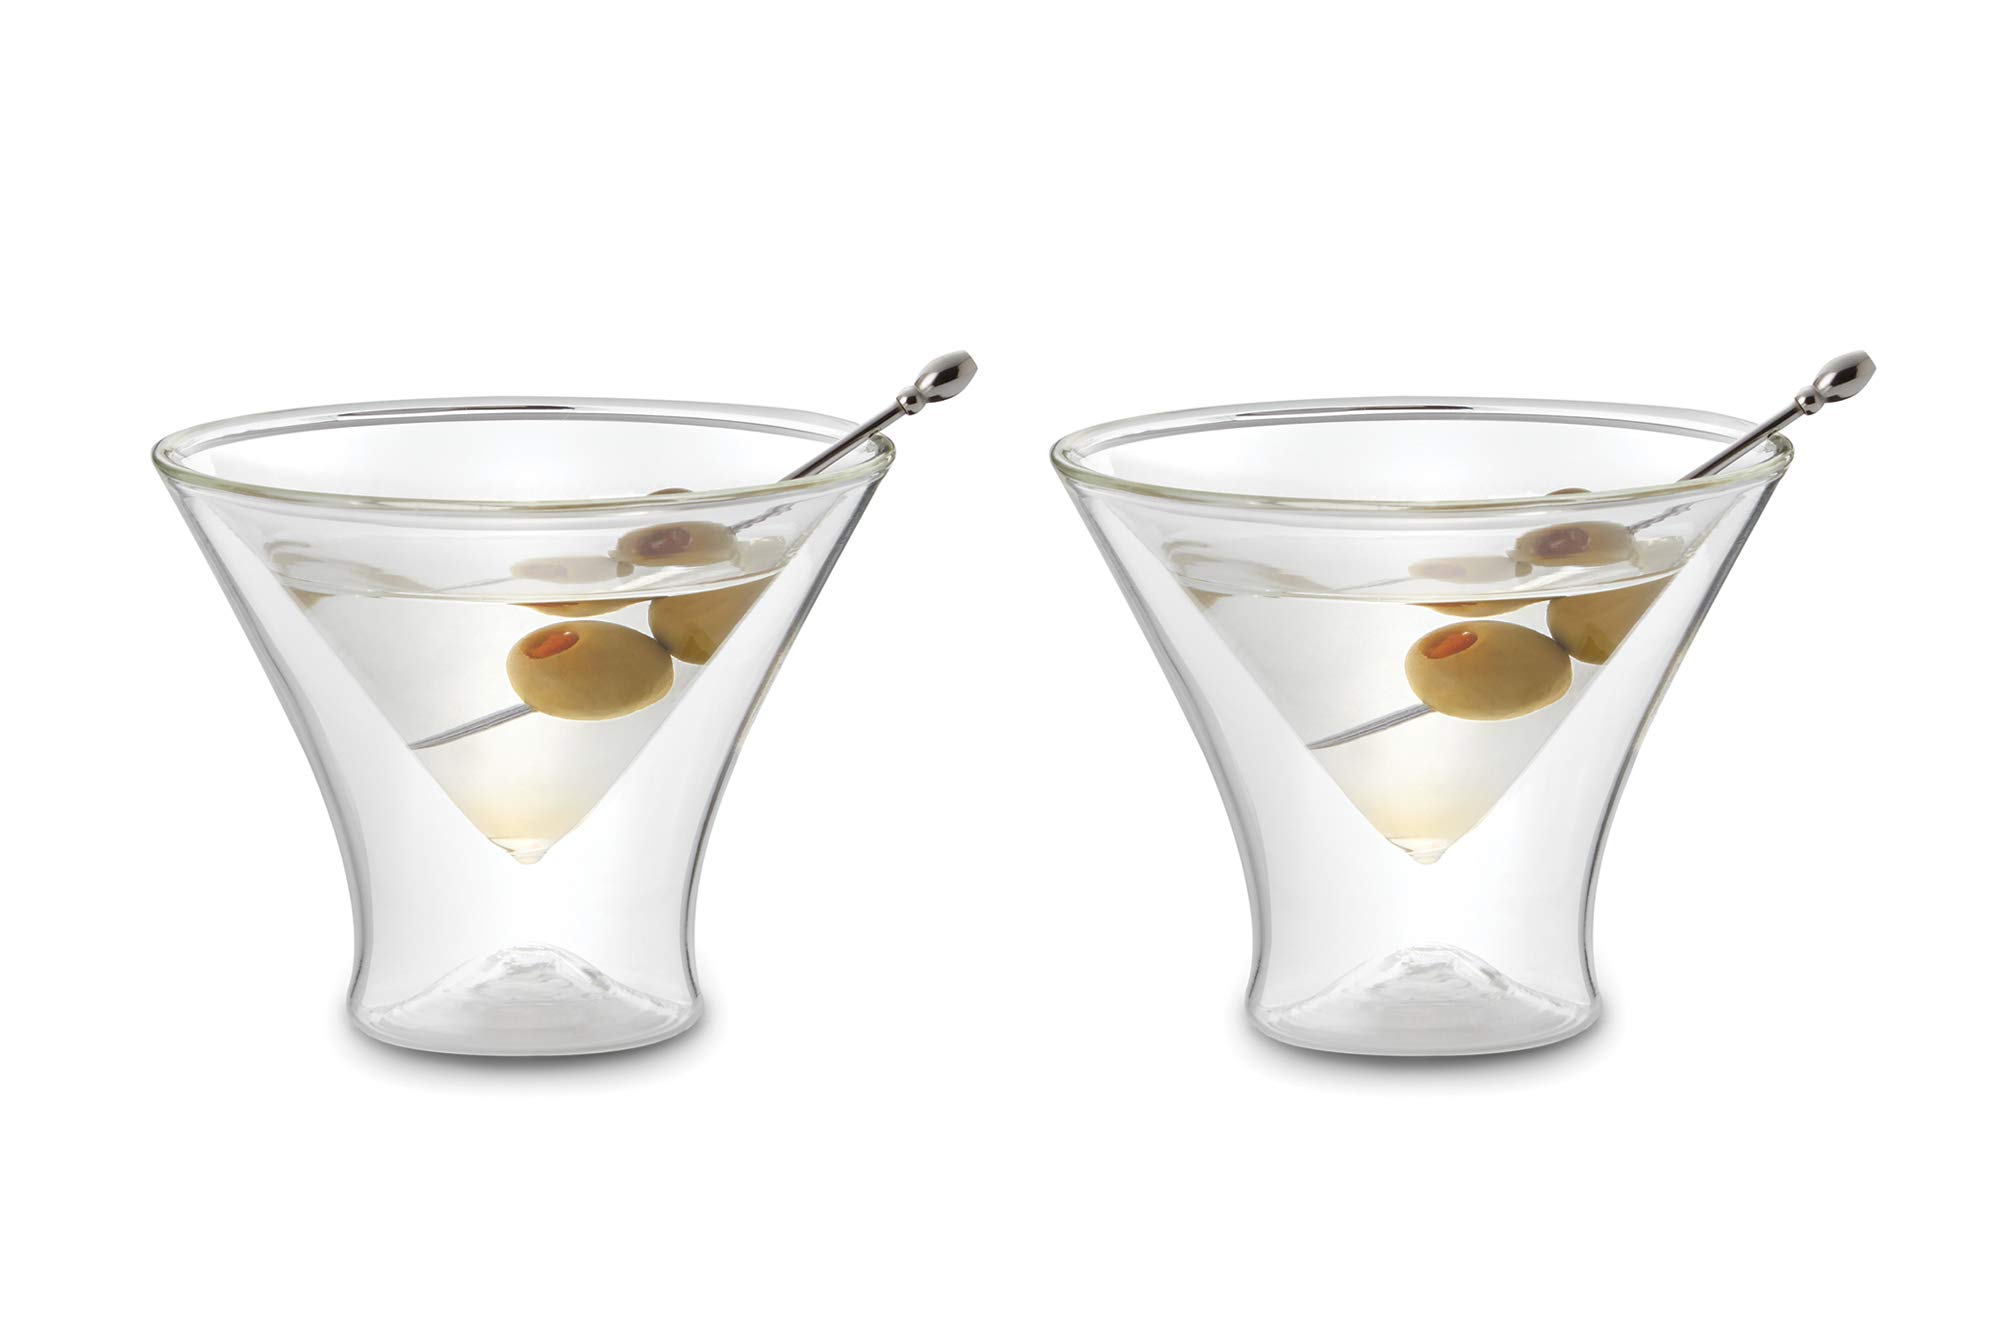 Outset Double Wall Glasses, Martini Glasses, Set of 2, Borosilicate Glassware